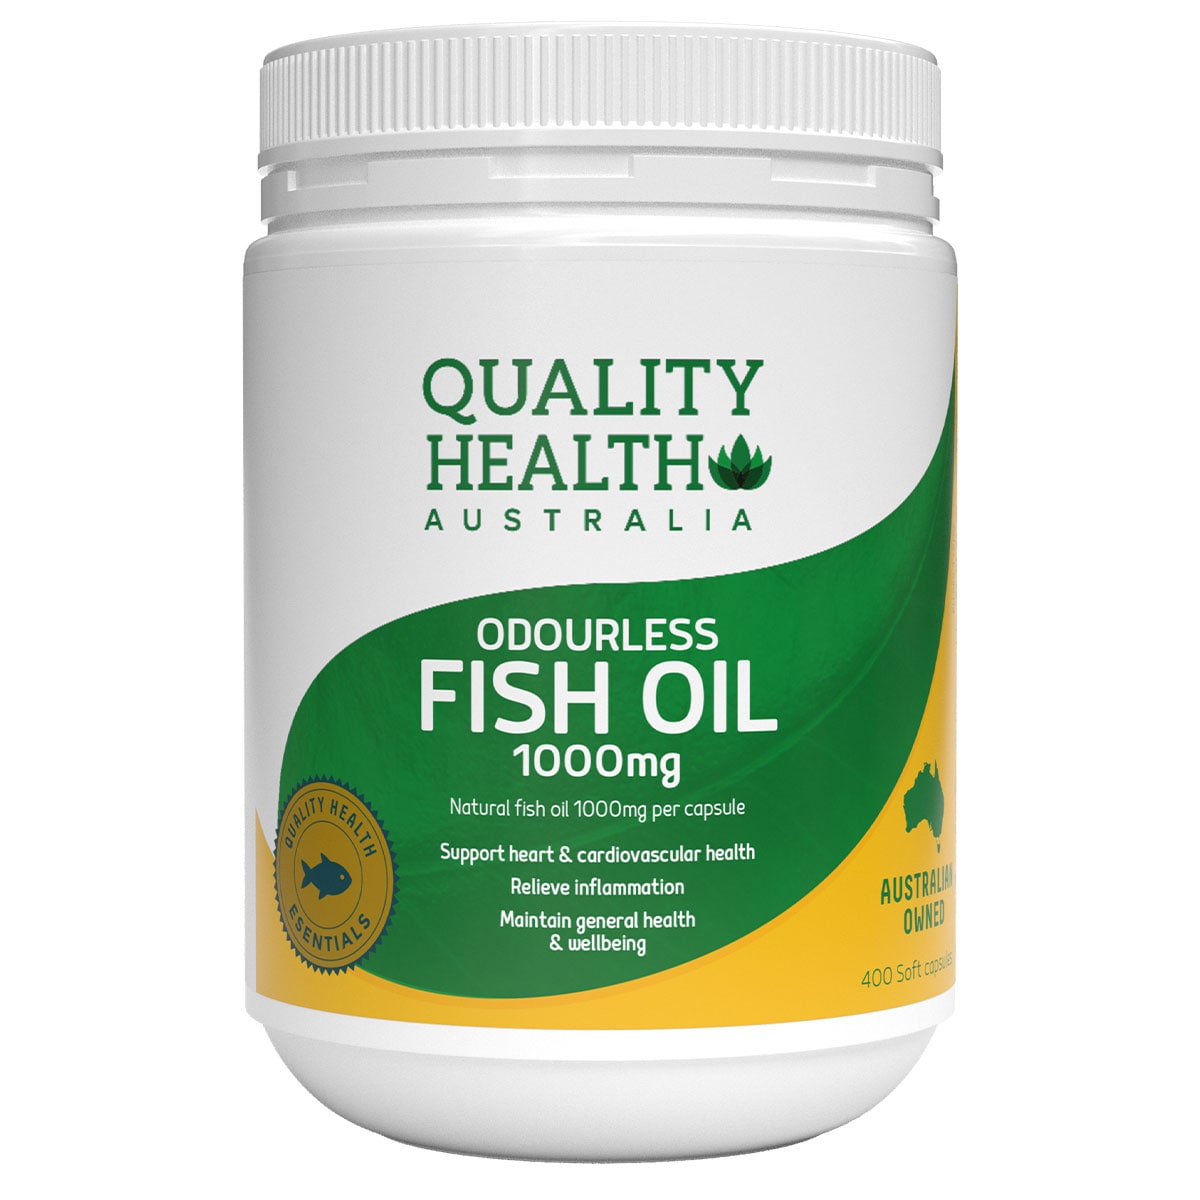 Quality Health Odourless Fish Oil 1000mg 400 Captures Australia